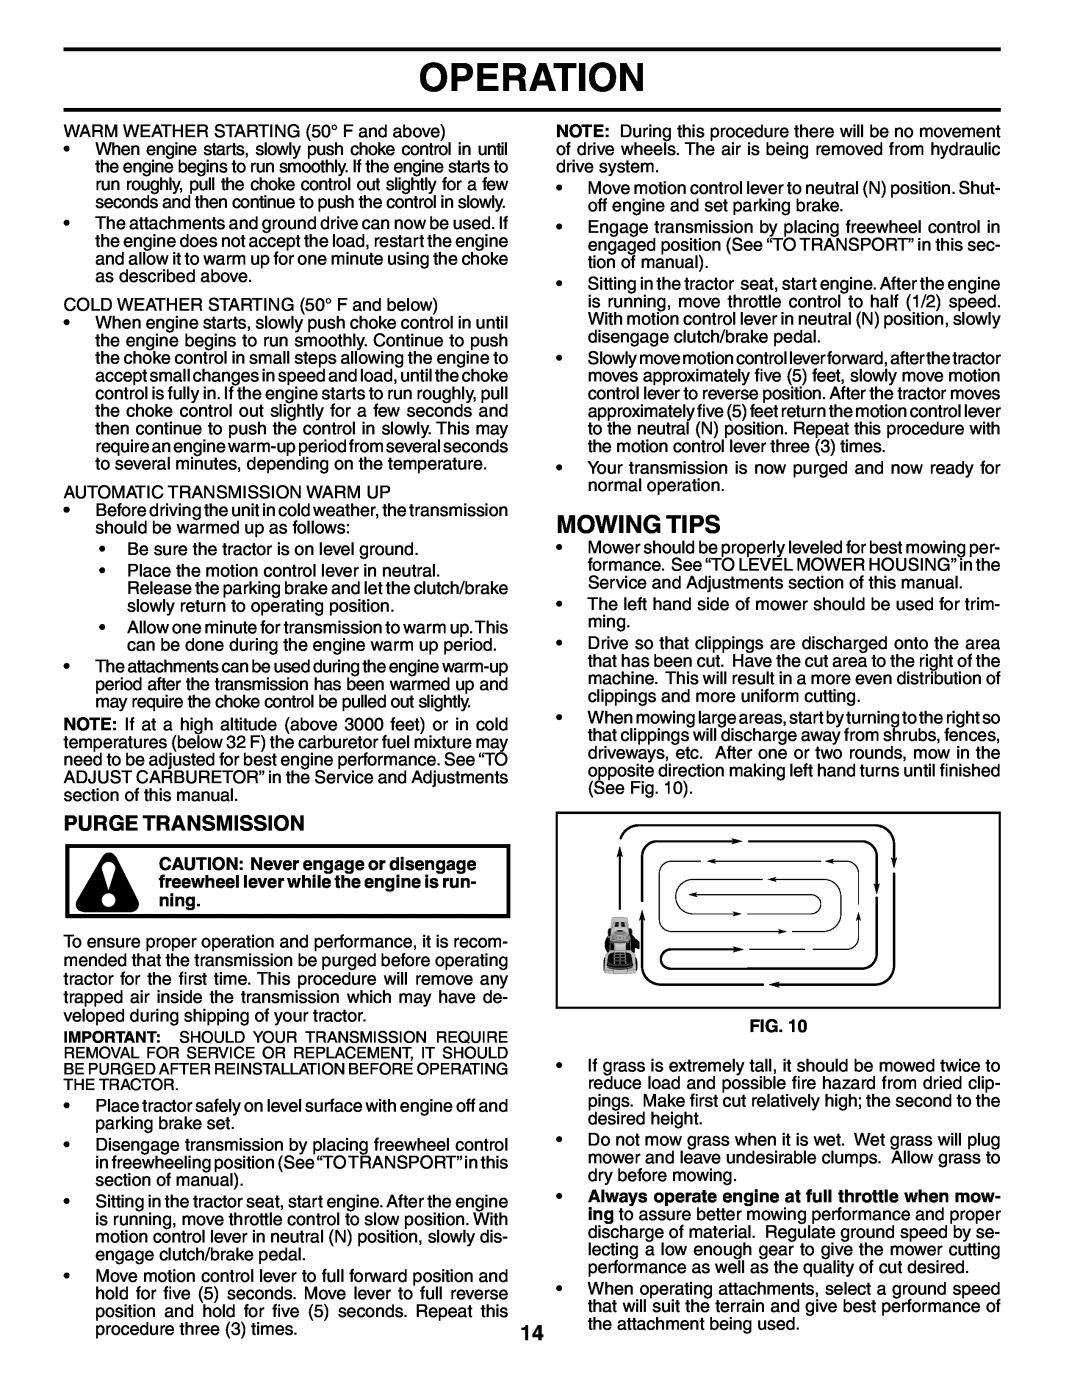 Poulan 195021 manual Mowing Tips, Purge Transmission, Operation 